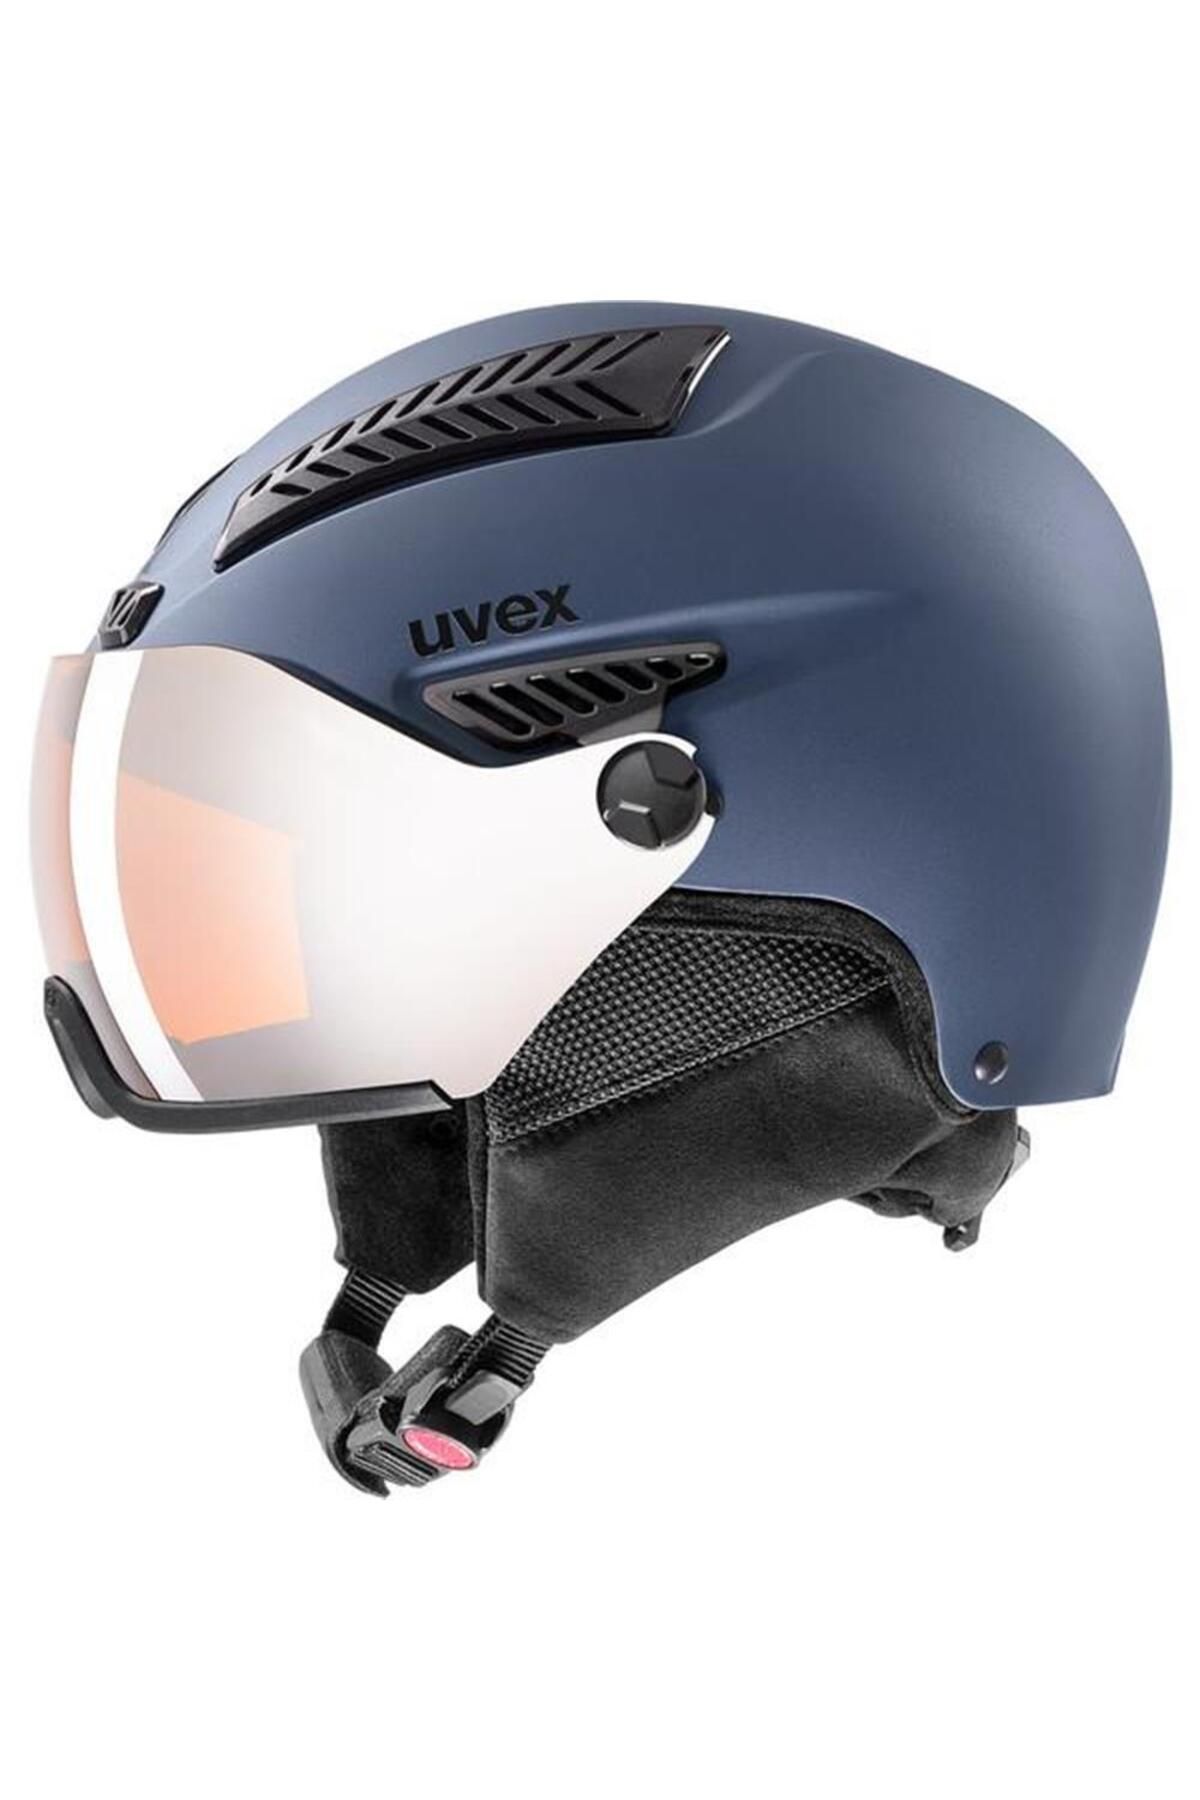 Uvex - Hlmt 600 Visor Mavimat -kayak Kask